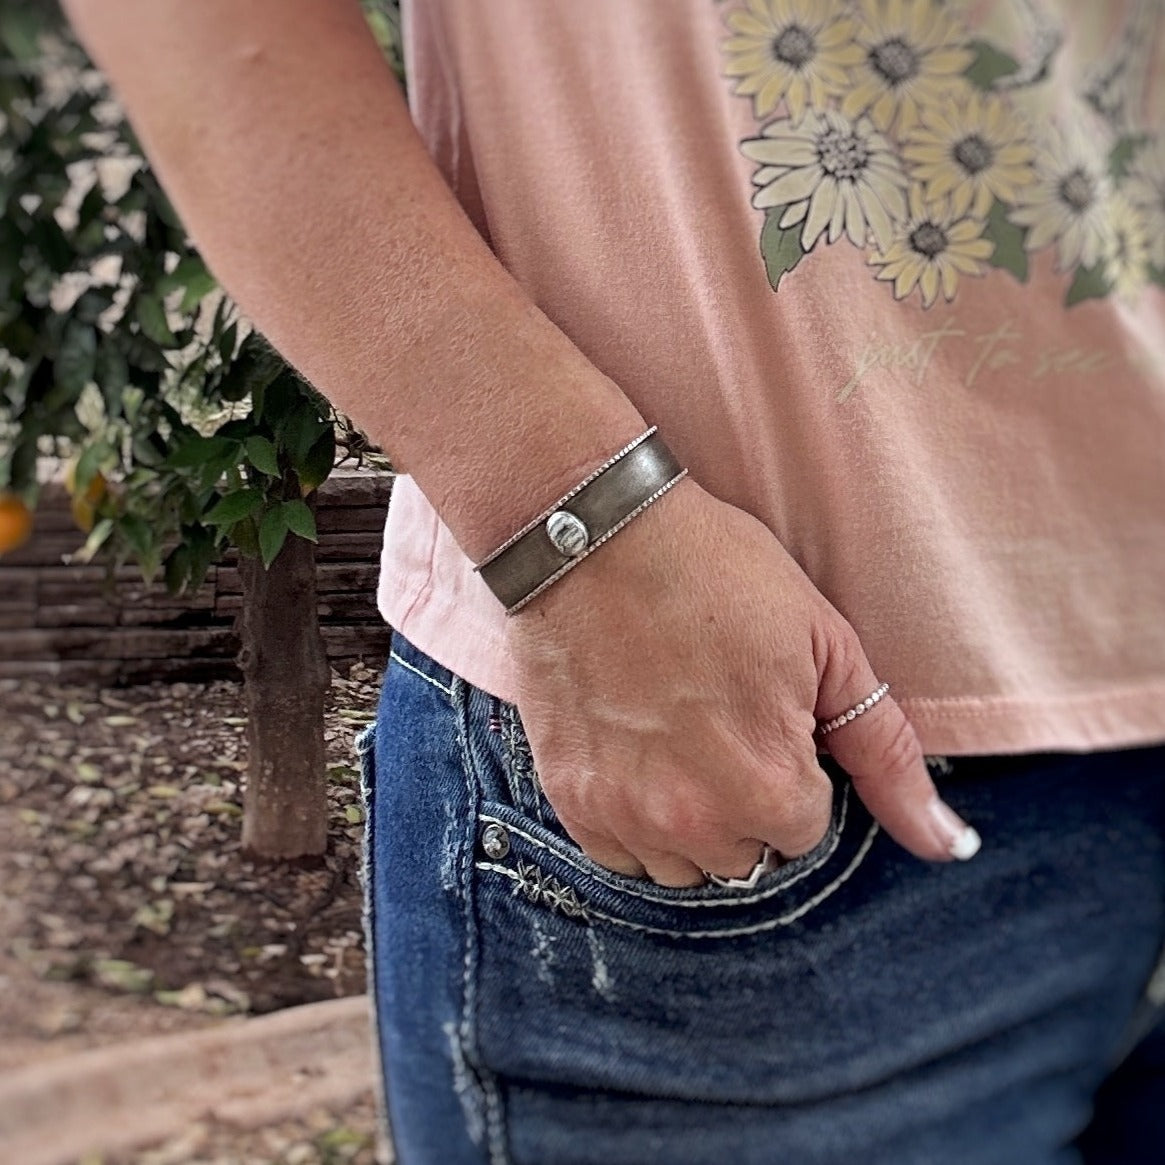 Cuffed | White Buffalo cuff bracelet